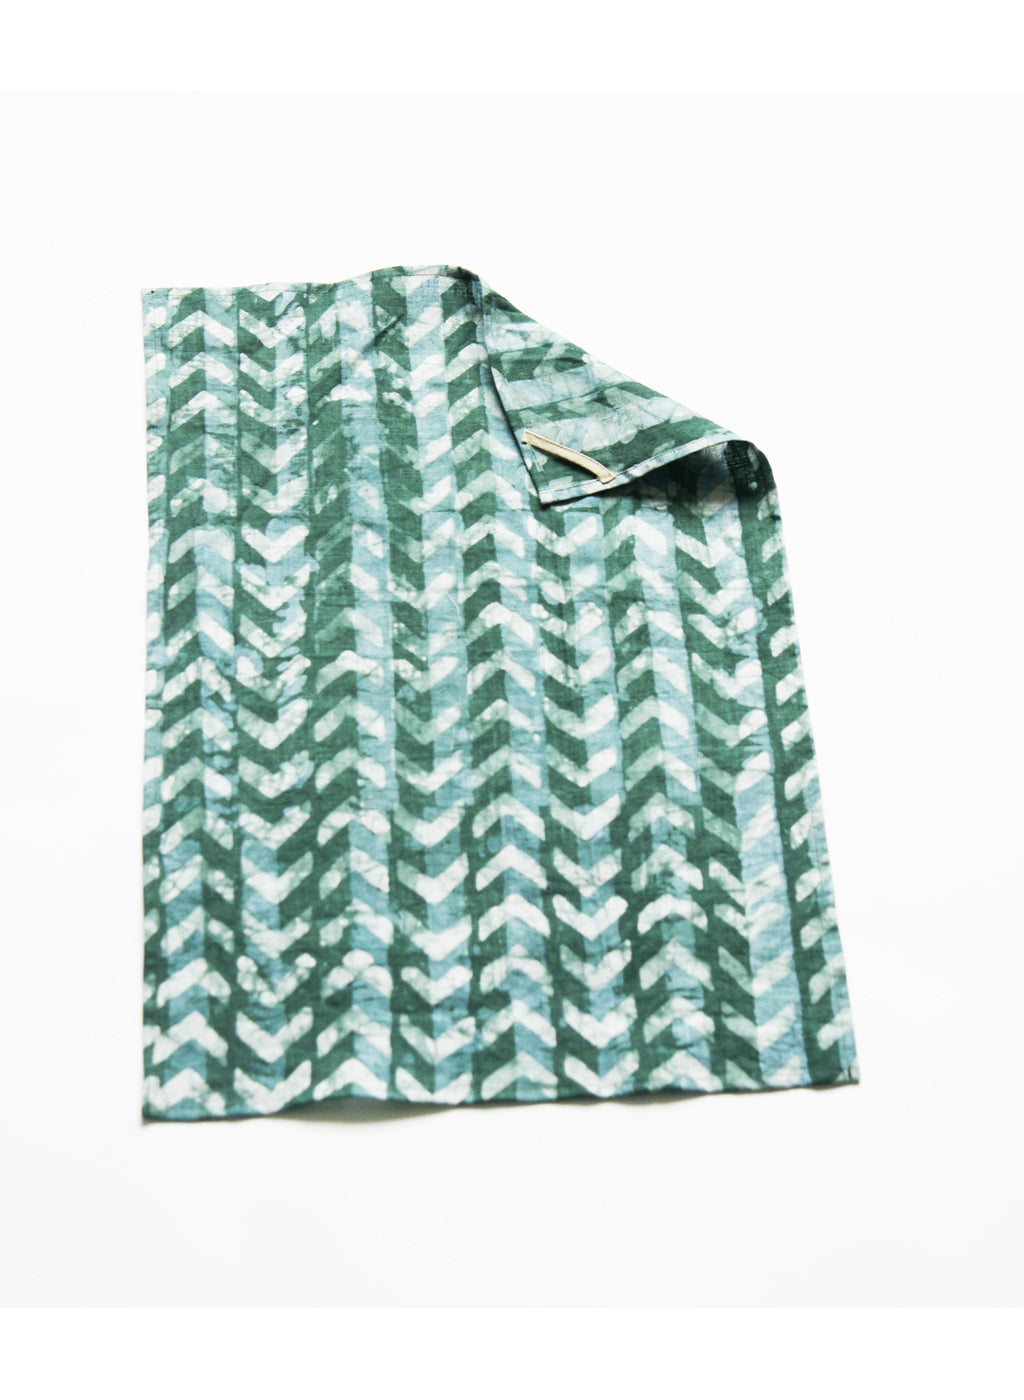 SOLD OUT: Teal Green Chevron Batik Linen Tea Towel